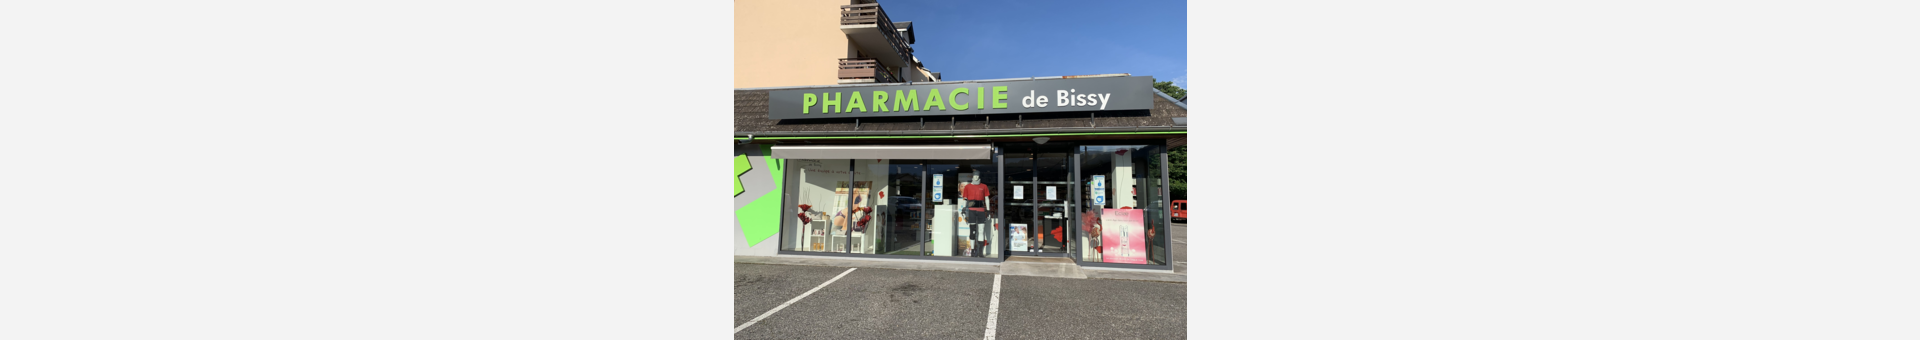 Pharmacie de Bissy,CHAMBÉRY